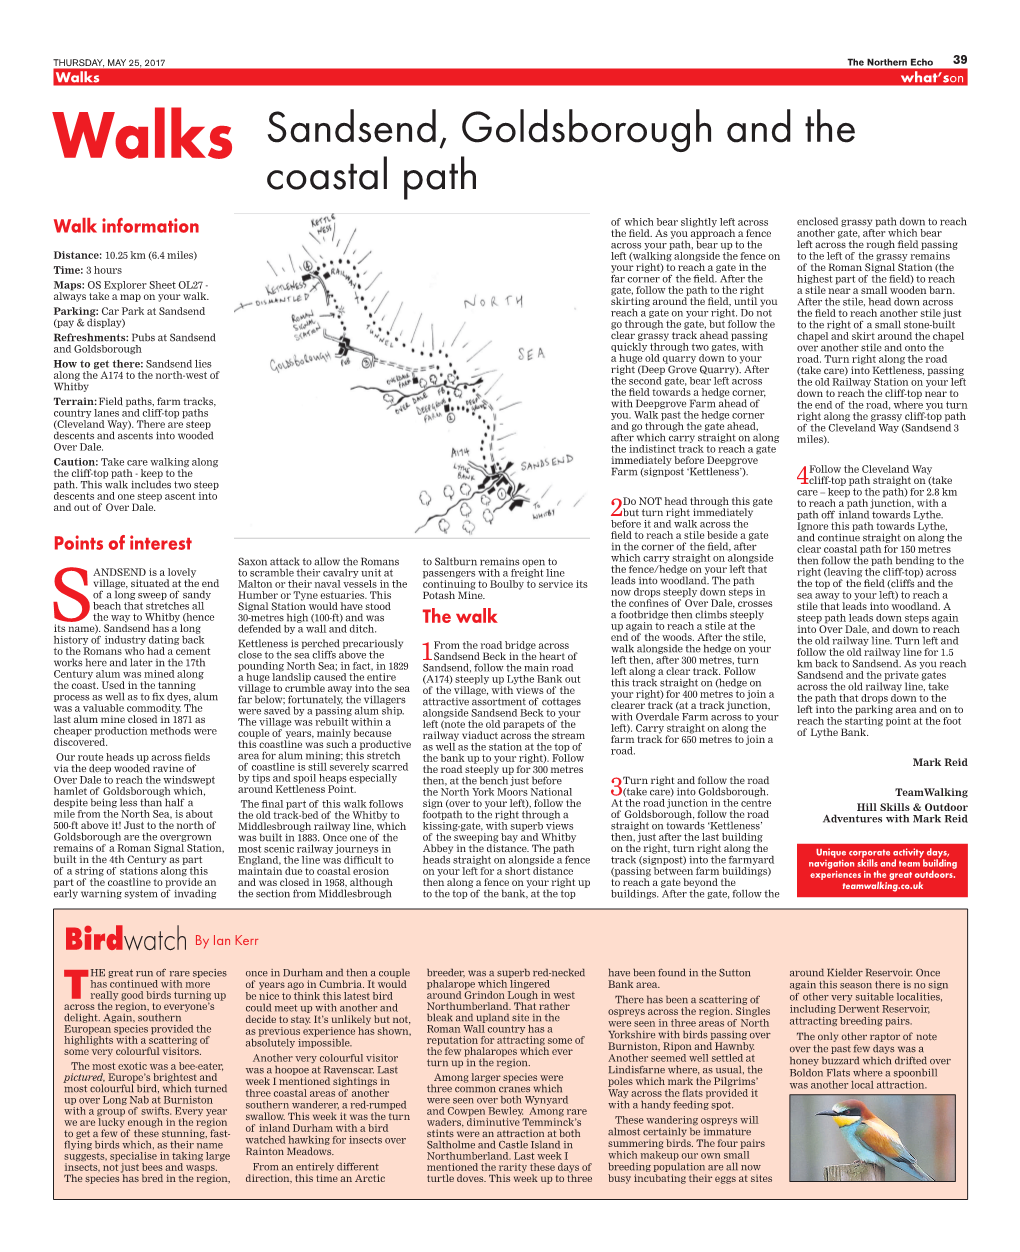 Sandsend, Goldsborough and the Coastal Path